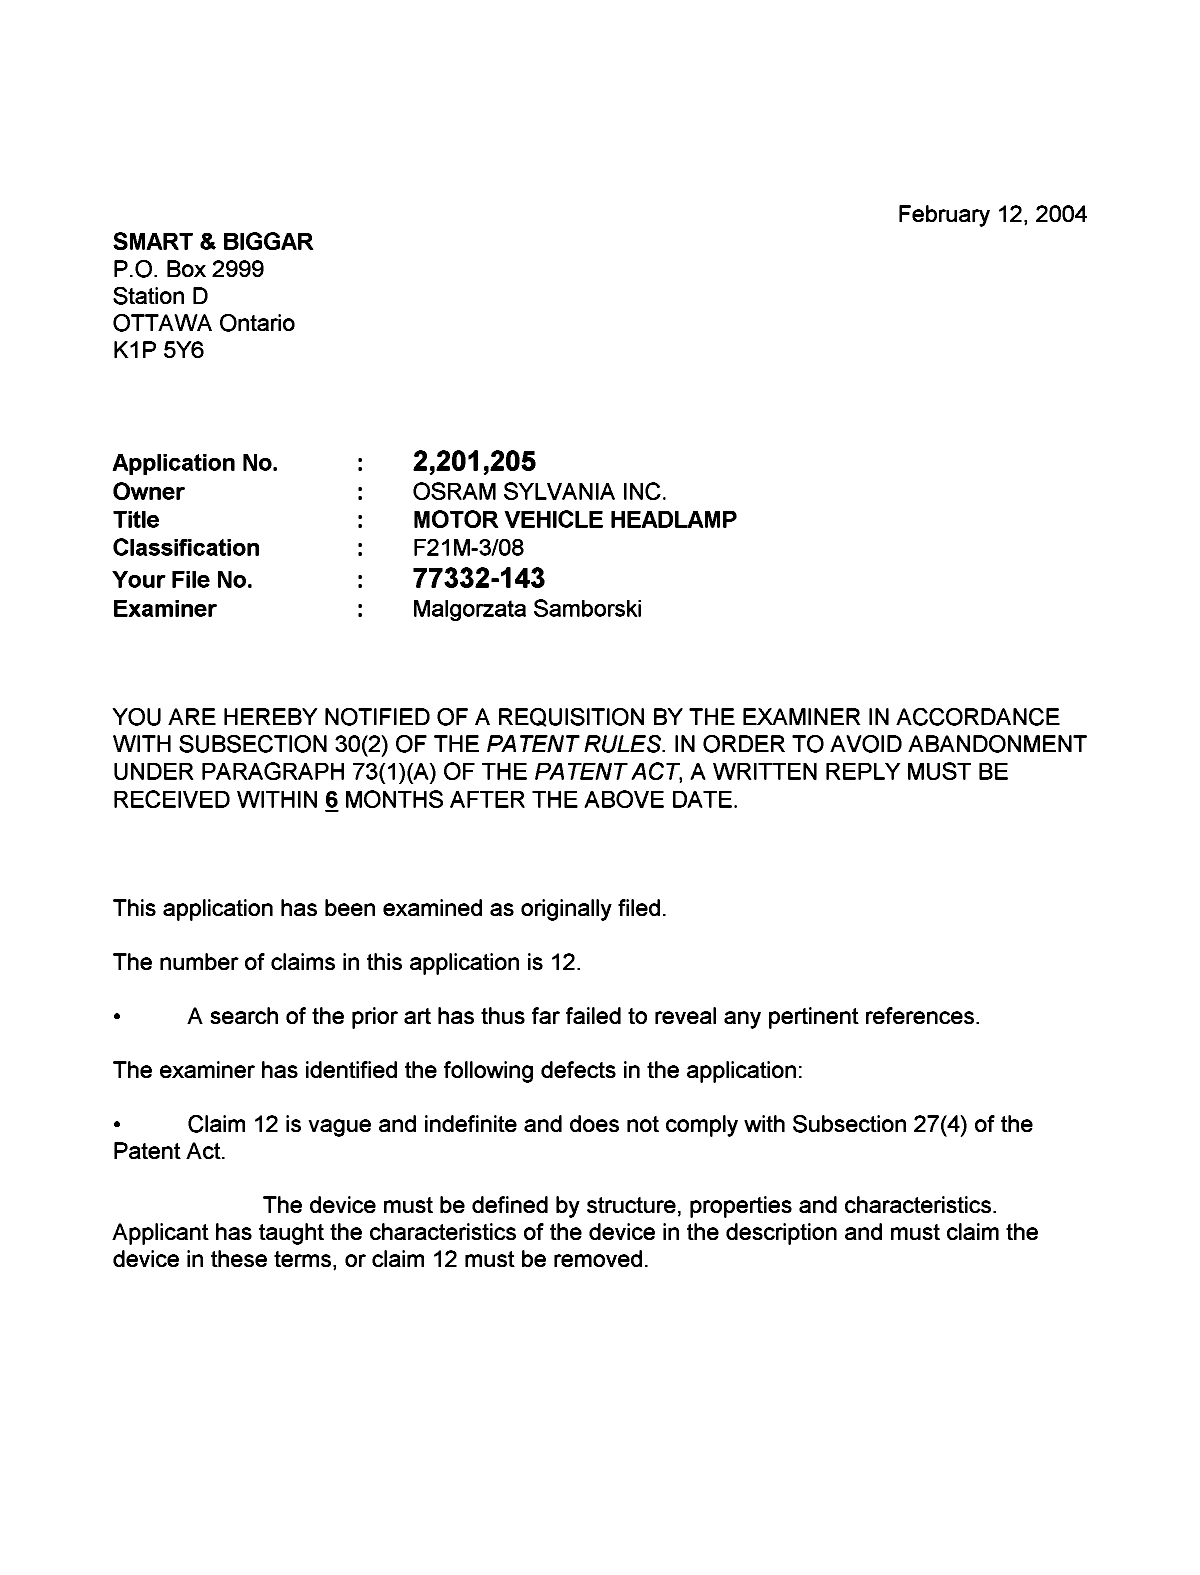 Canadian Patent Document 2201205. Prosecution-Amendment 20040212. Image 1 of 2